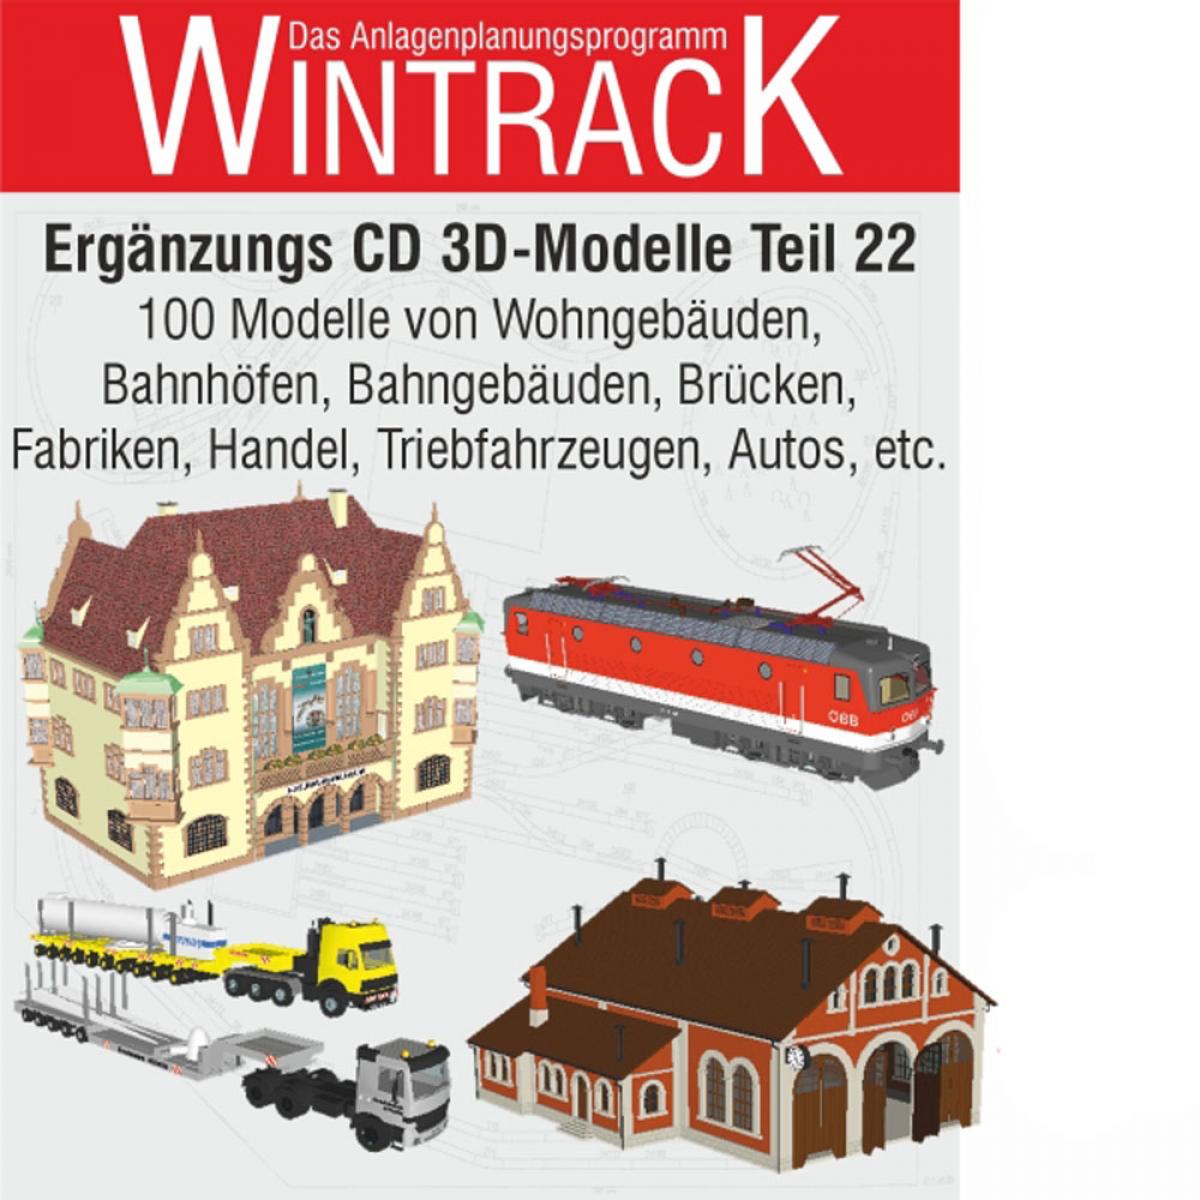 Original Wintrack Ergänzungs CD 3D-Modelle Teil 22